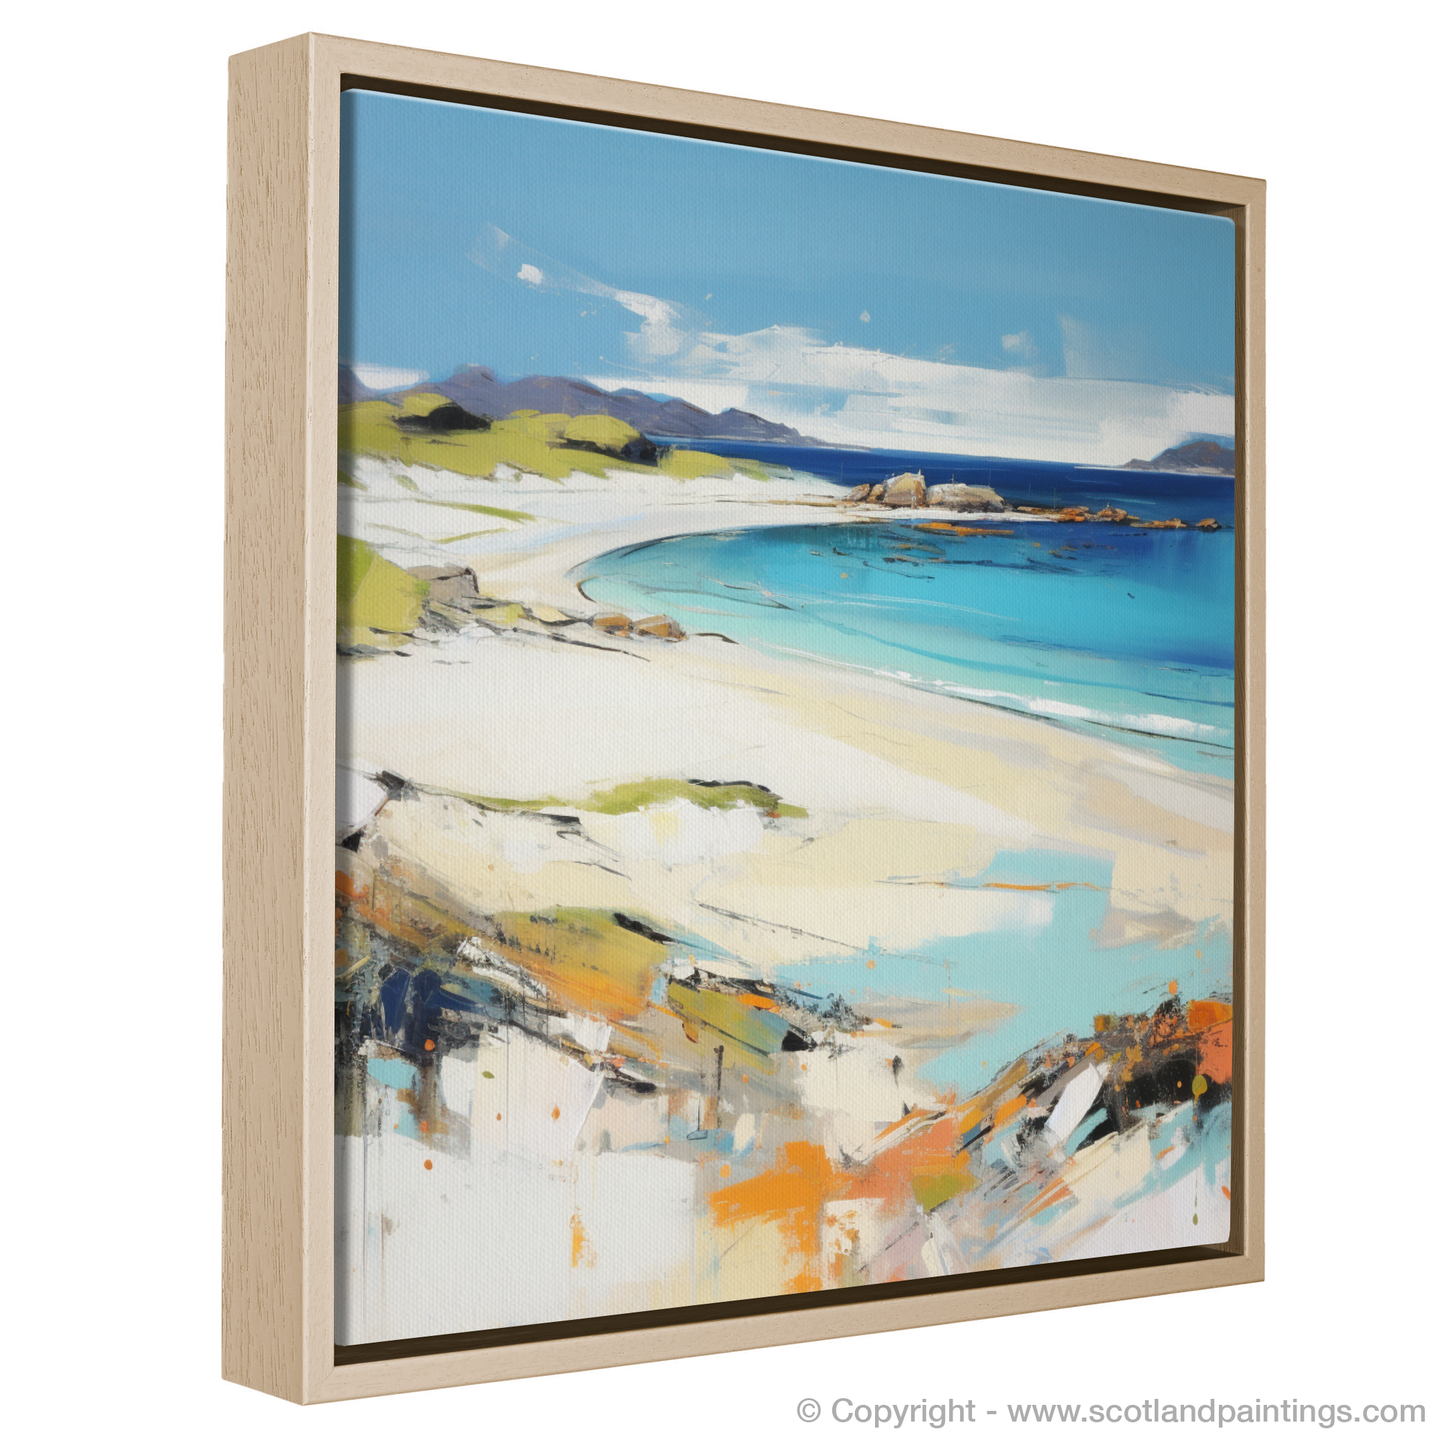 Painting and Art Print of Camusdarach Beach, Arisaig entitled "Arisaig's Coastal Symphony".